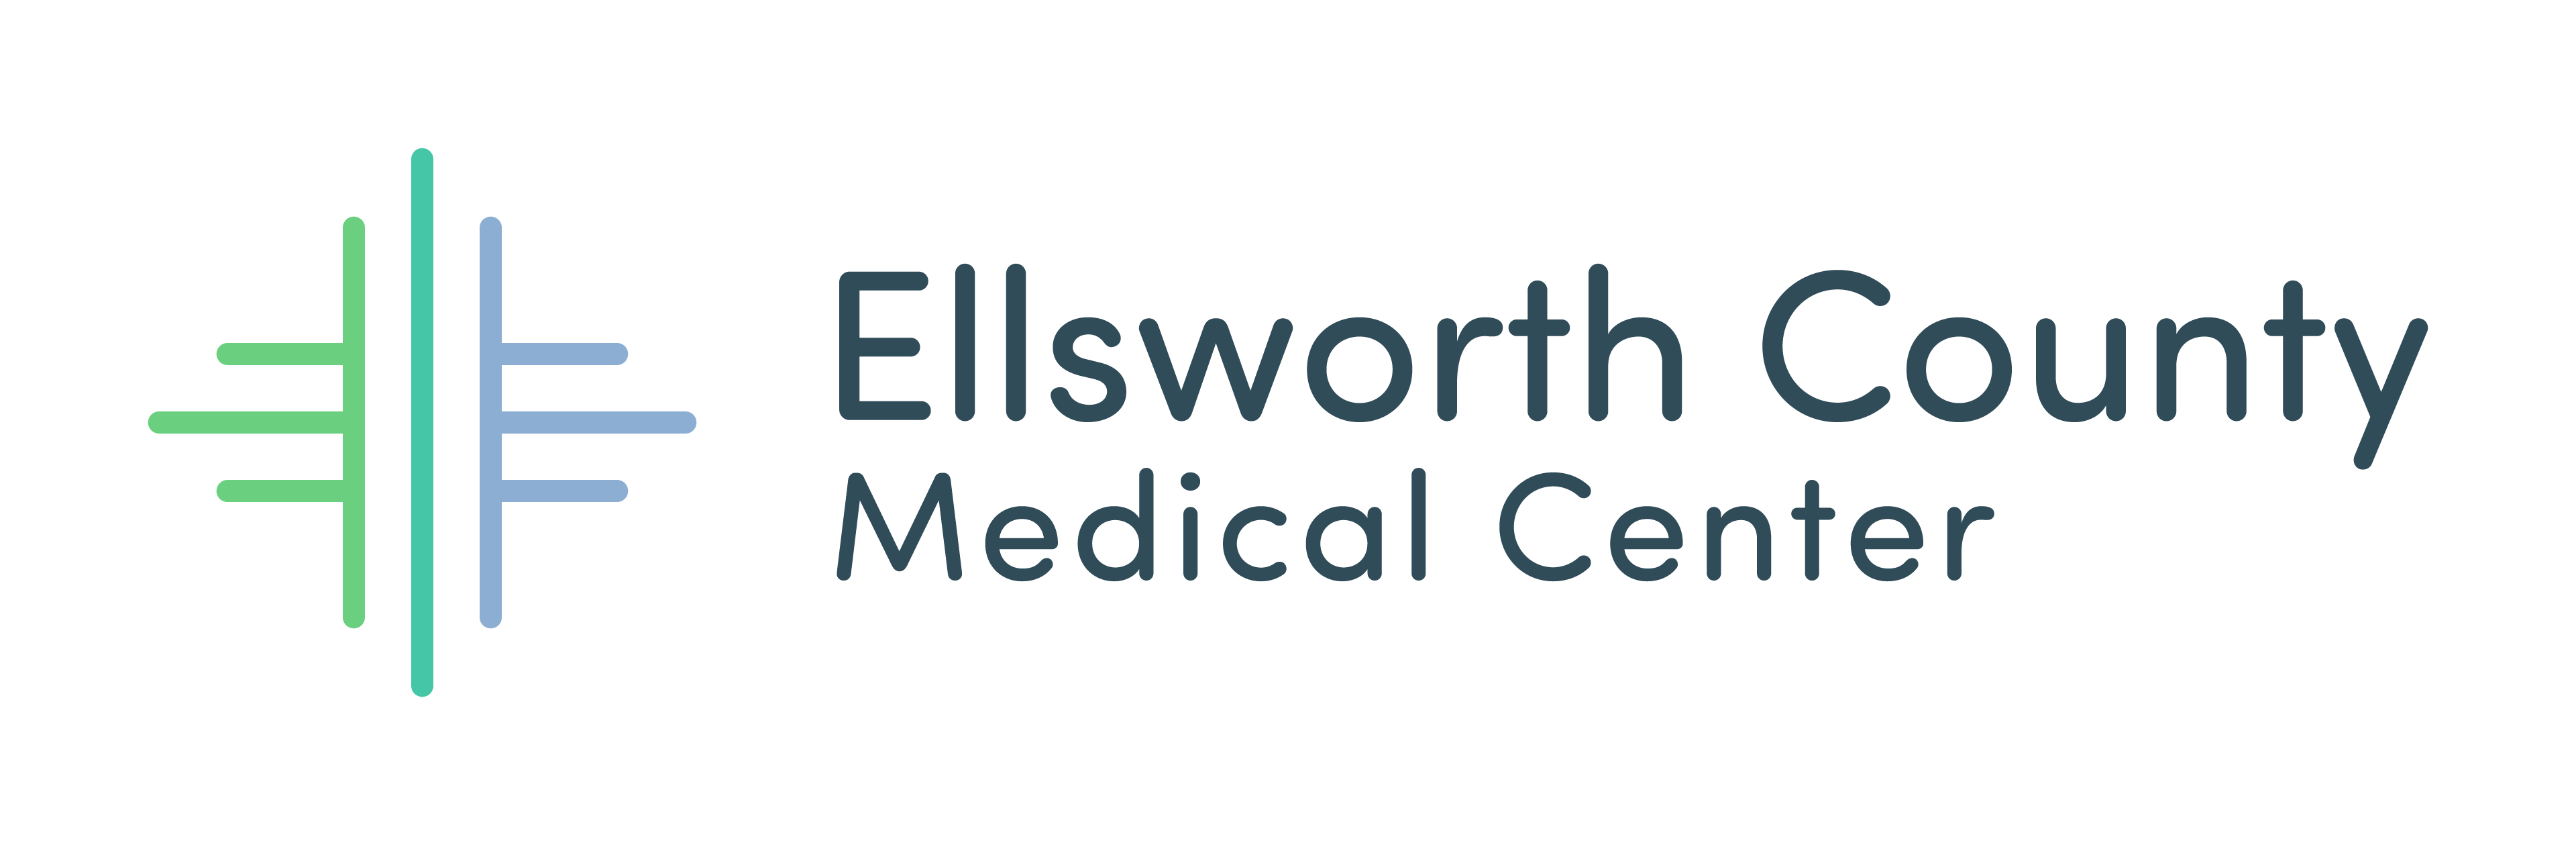 Ellsworth County Medical Center Intranet